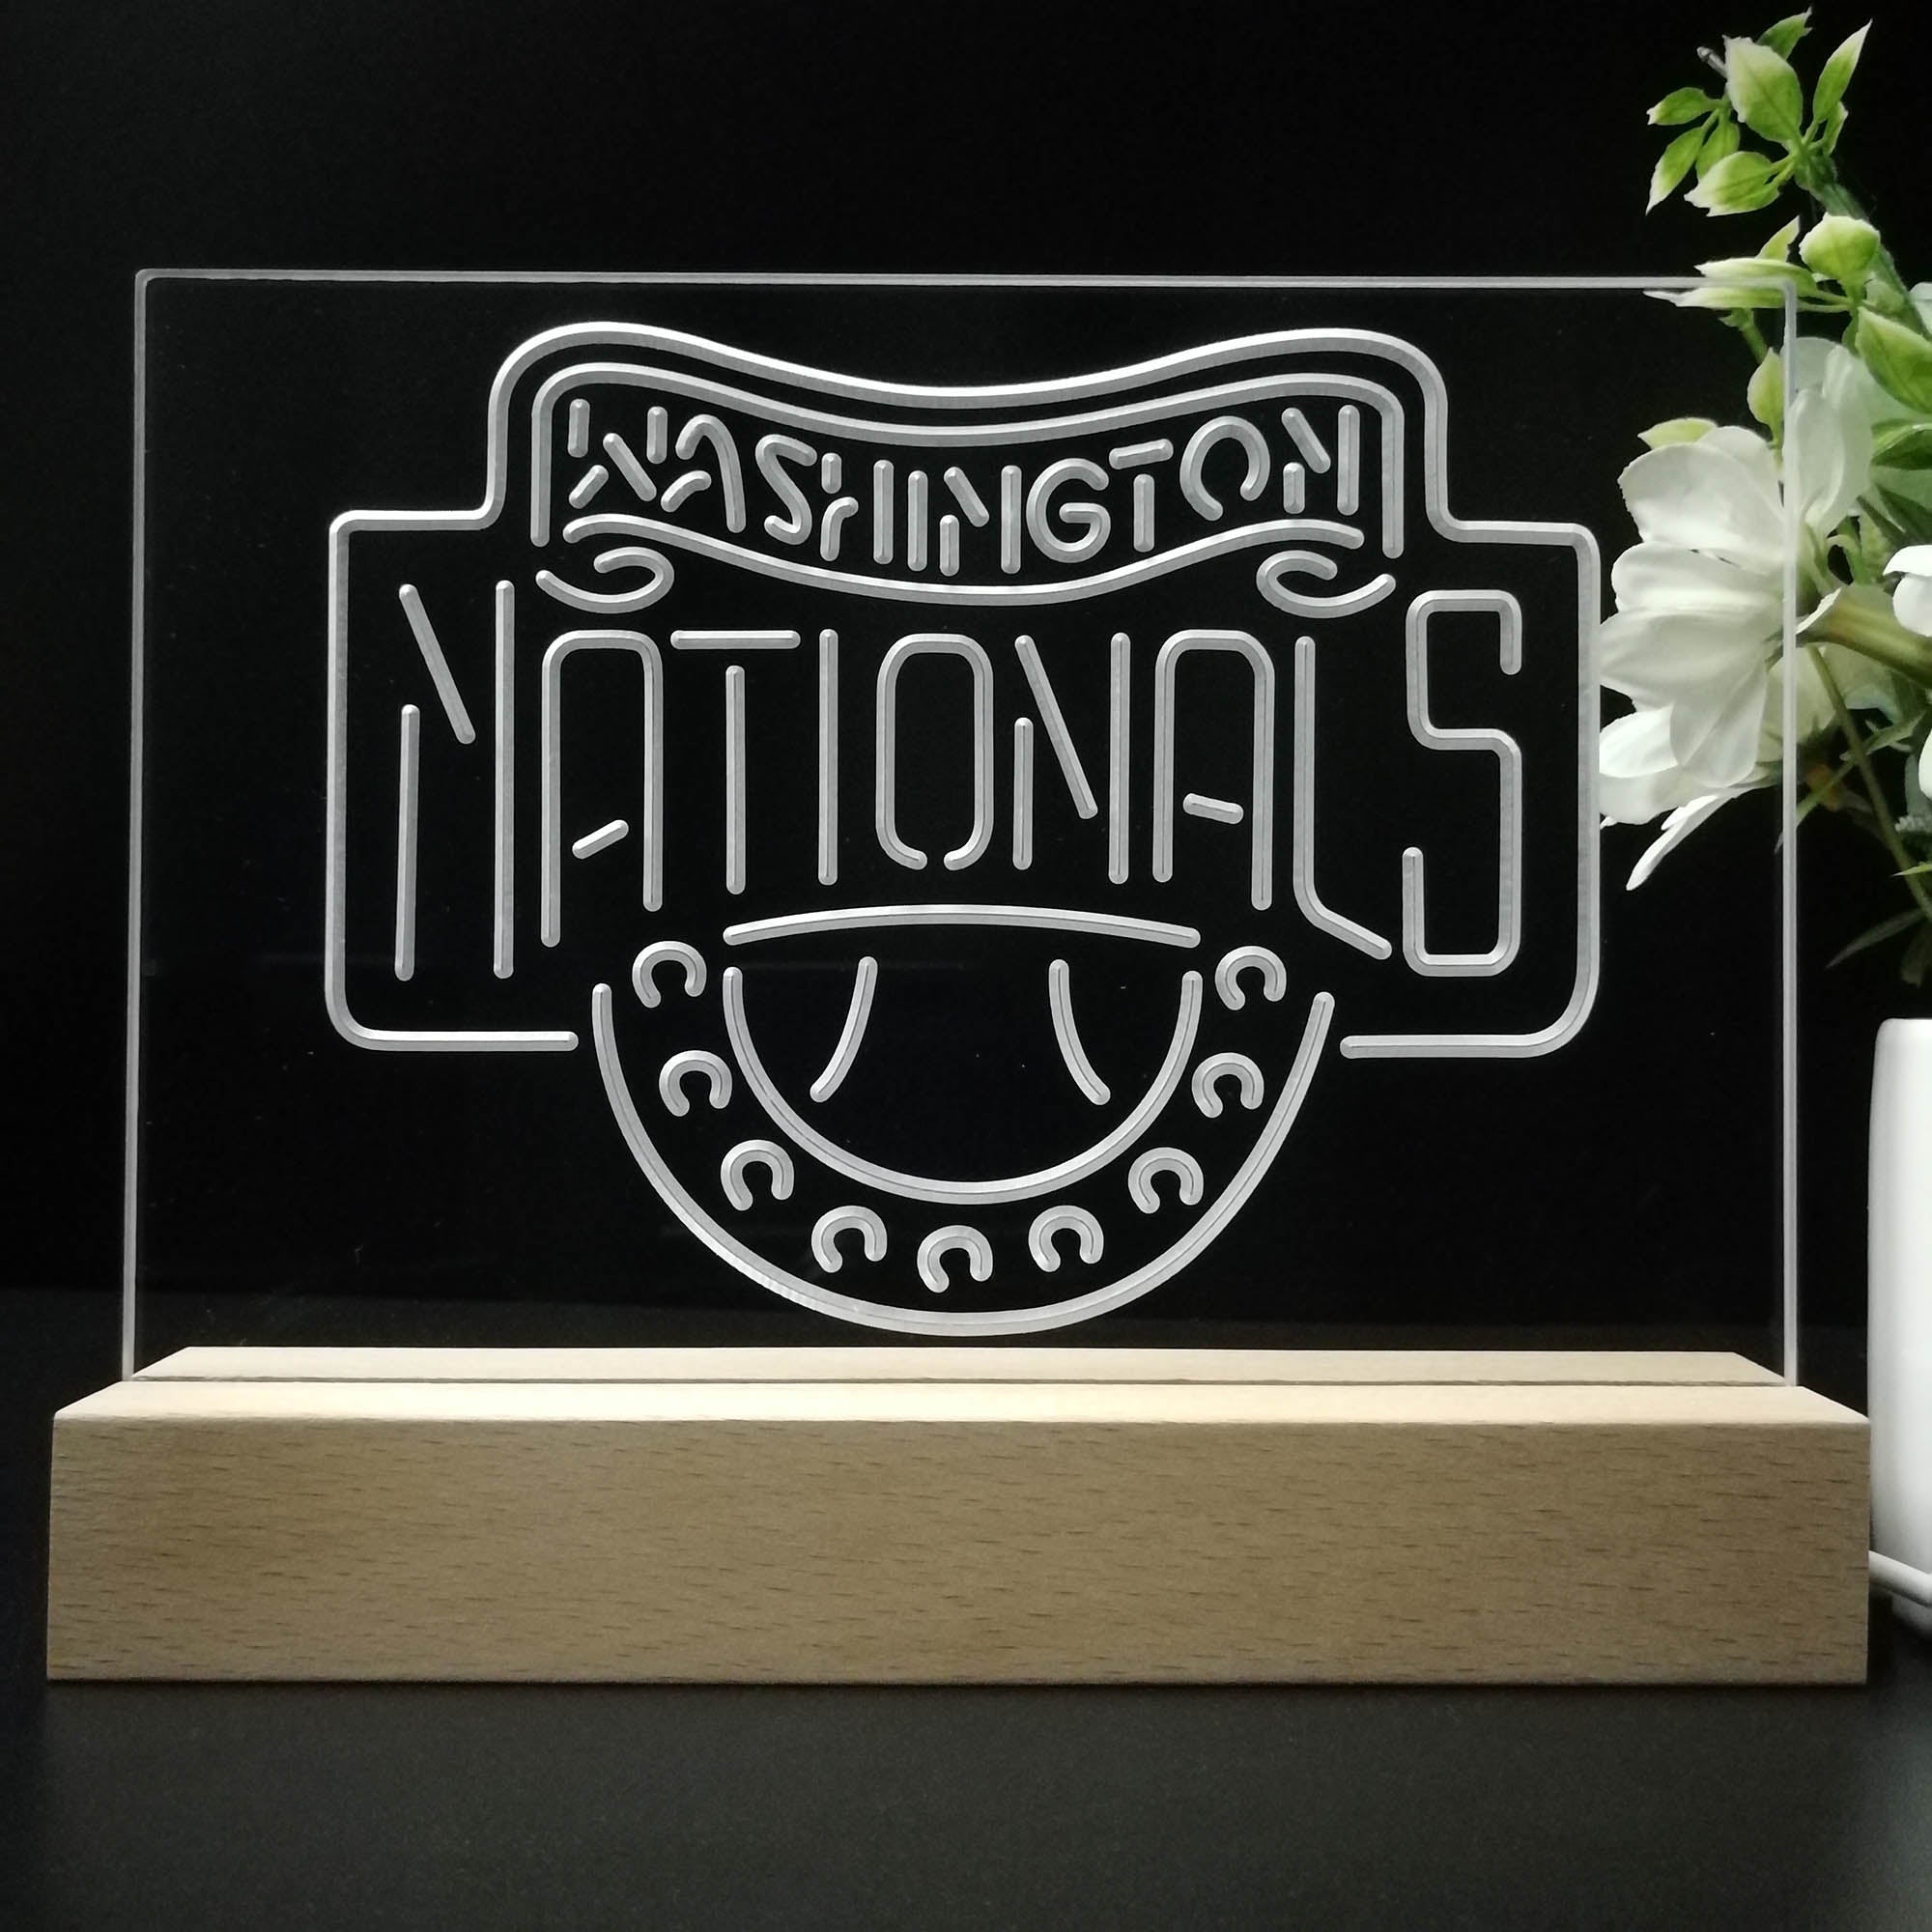 Washington Nationals Neon Sign Pub Bar Lamp